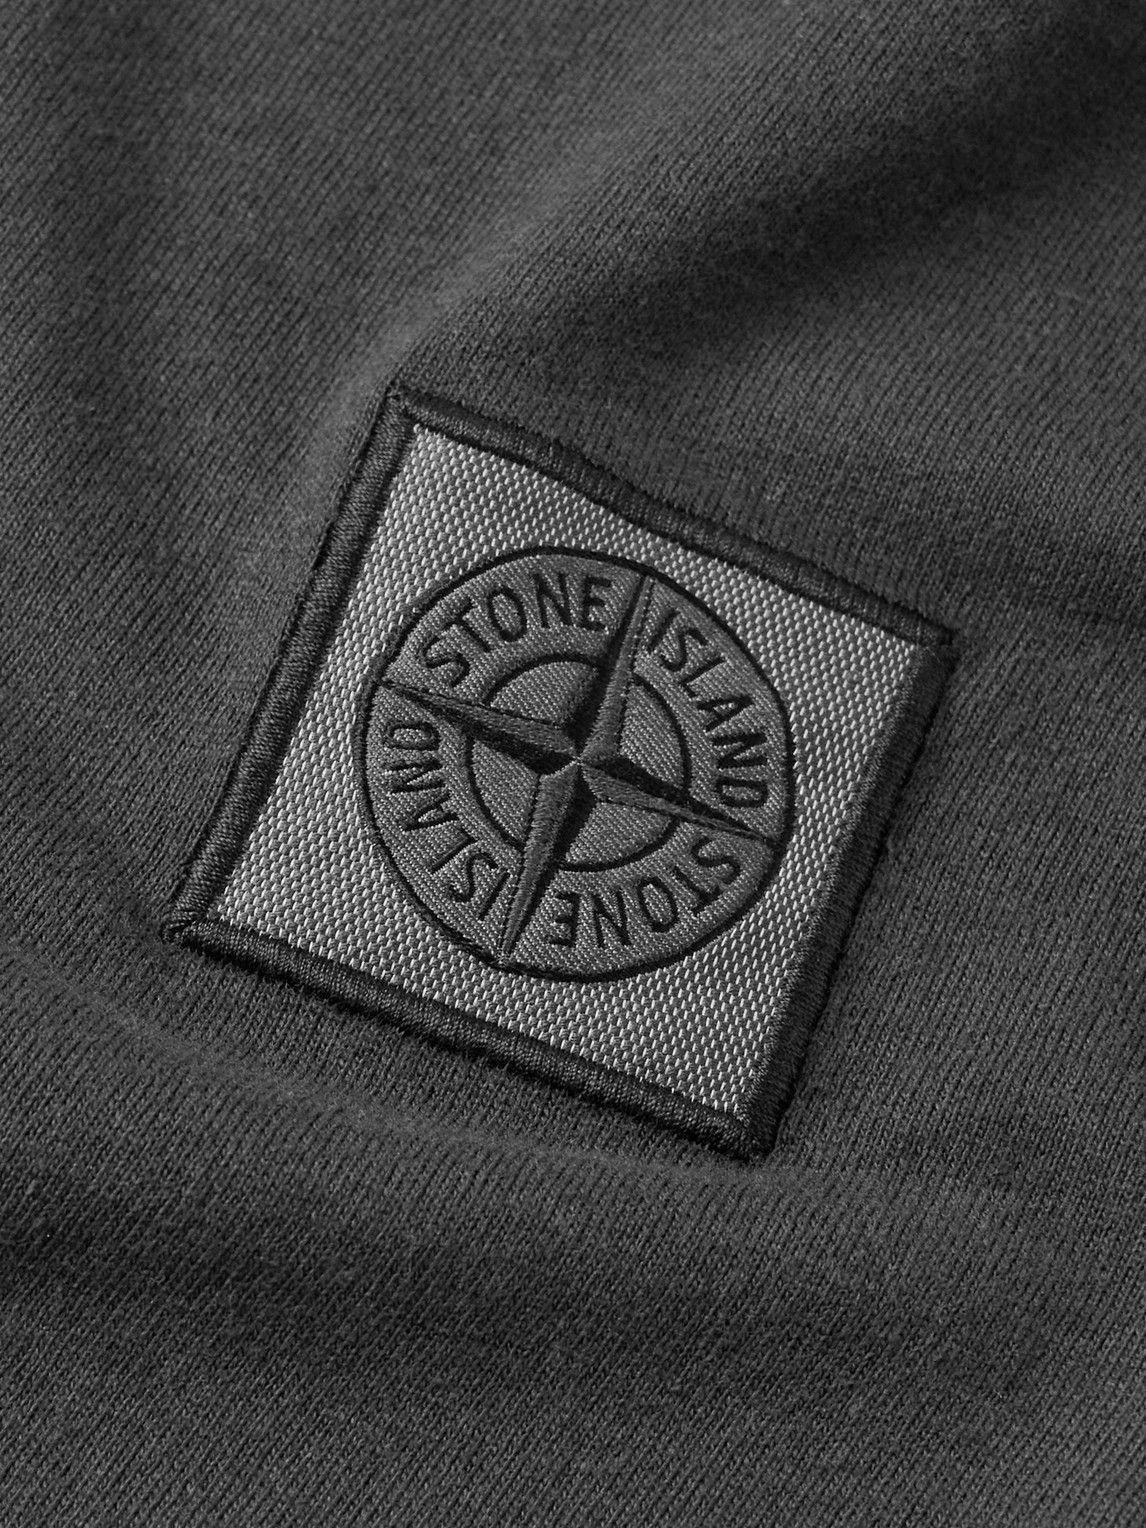 Stone Island - Logo-Appliquéd Cotton-Jersey T-Shirt - Gray Stone Island